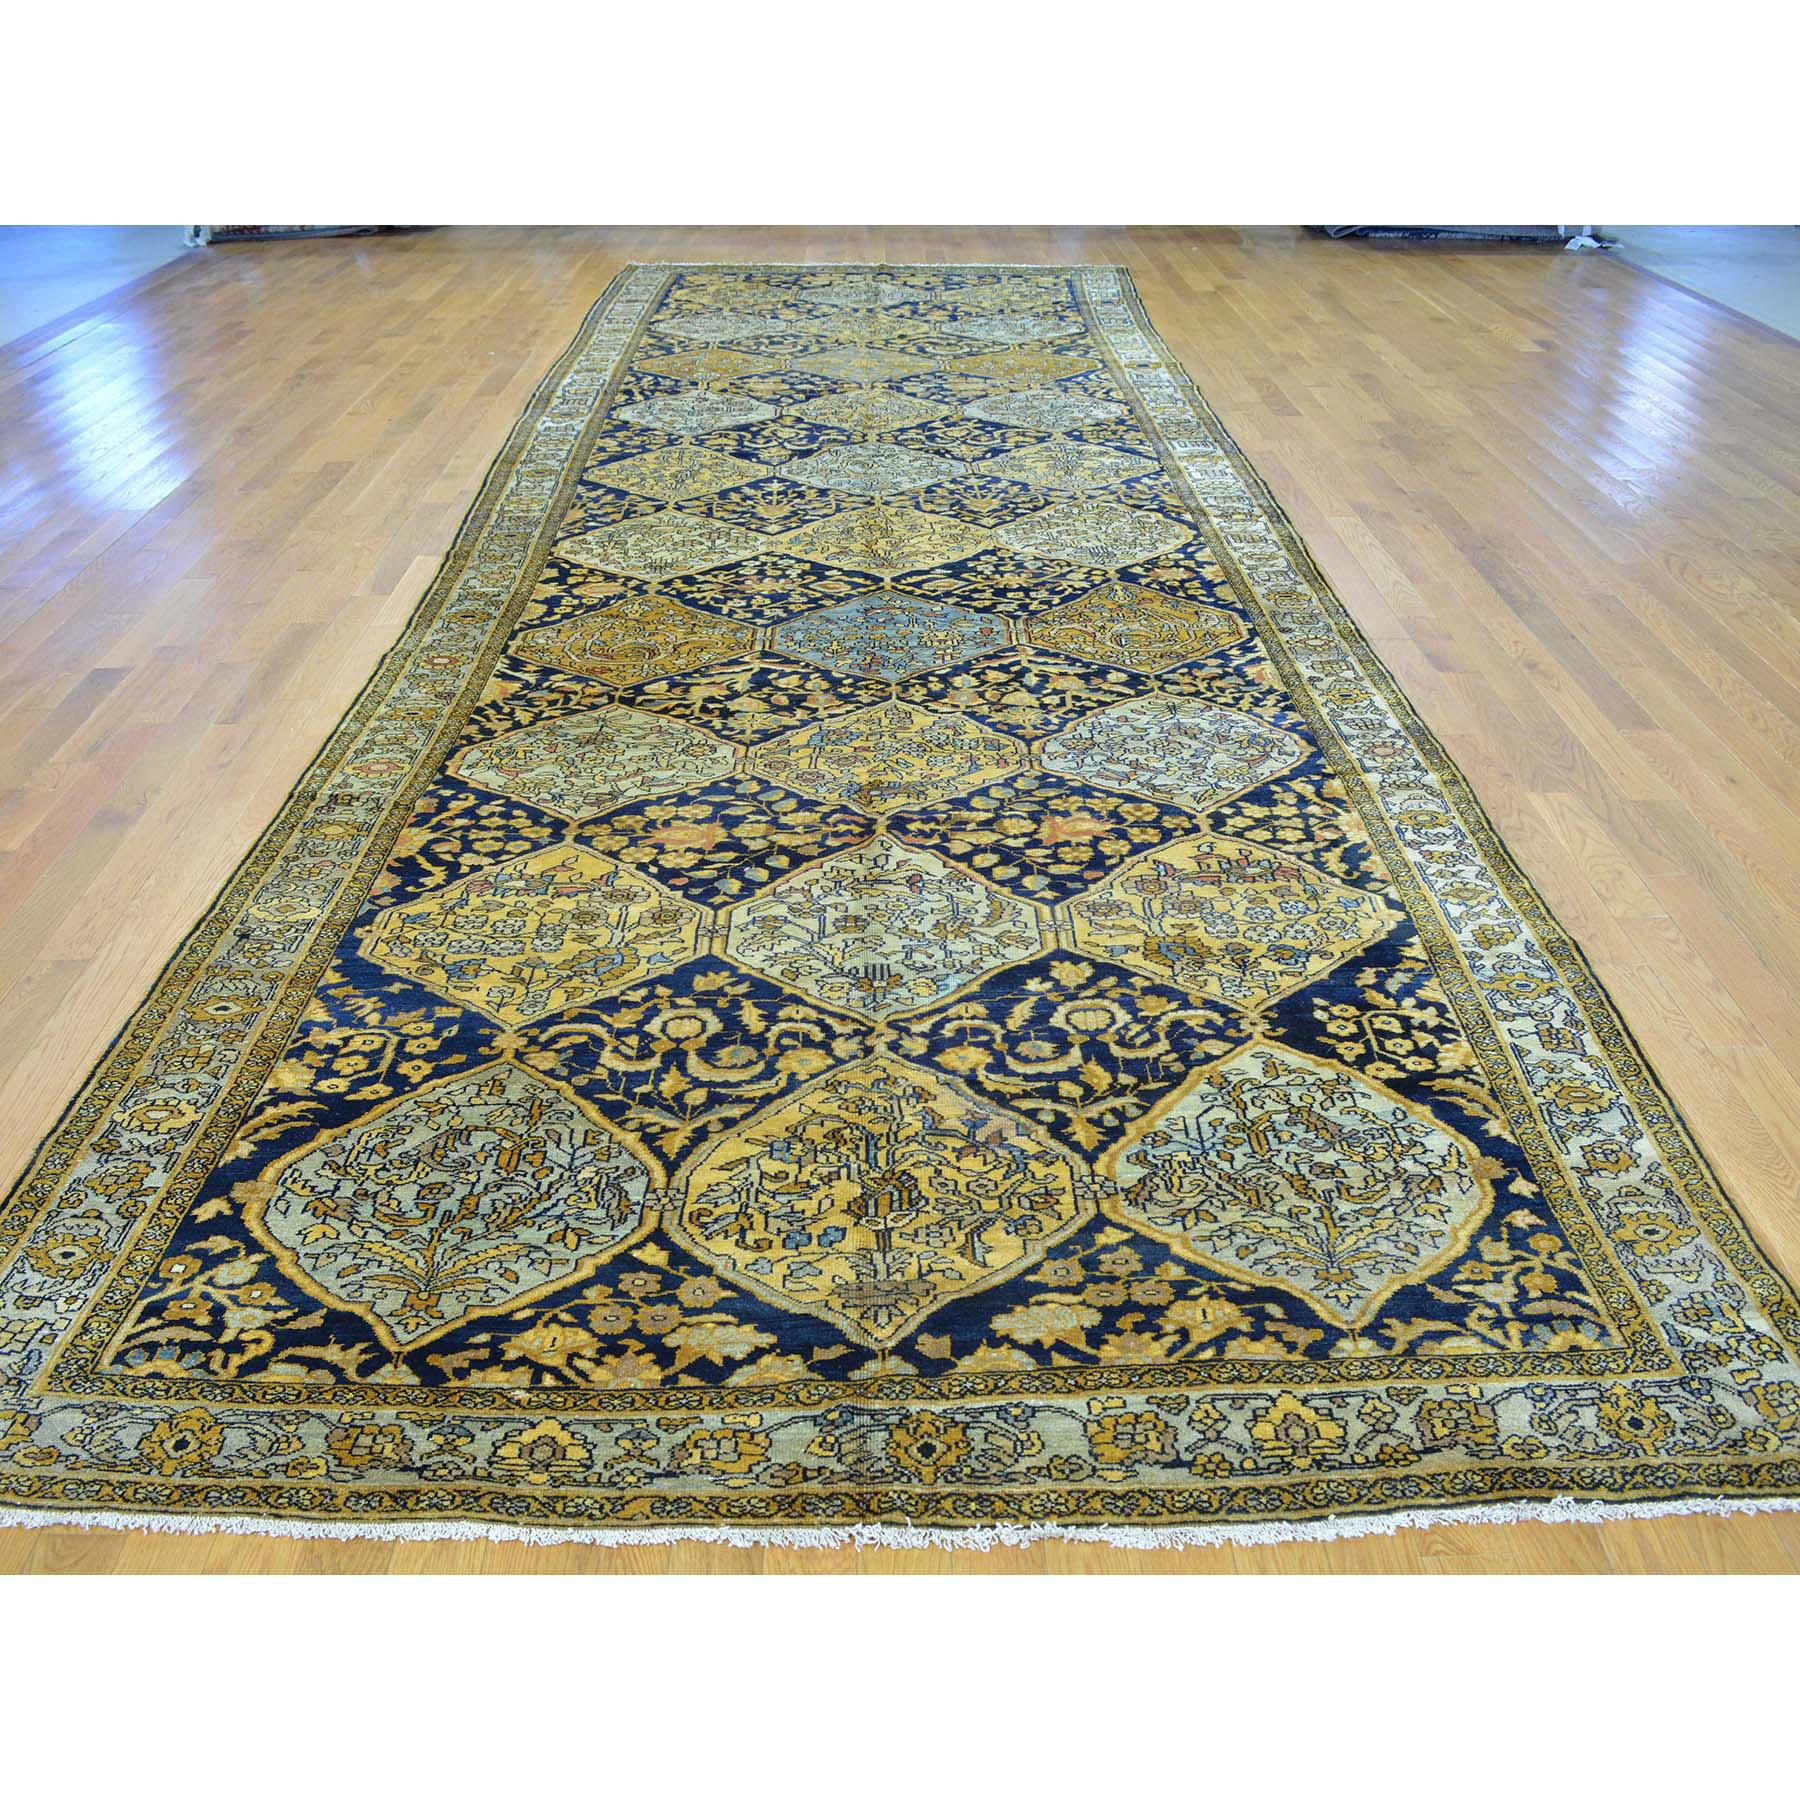 Antique Persian Bakhtiari excellent condition wide runner Oriental rug. Measures: 6'8